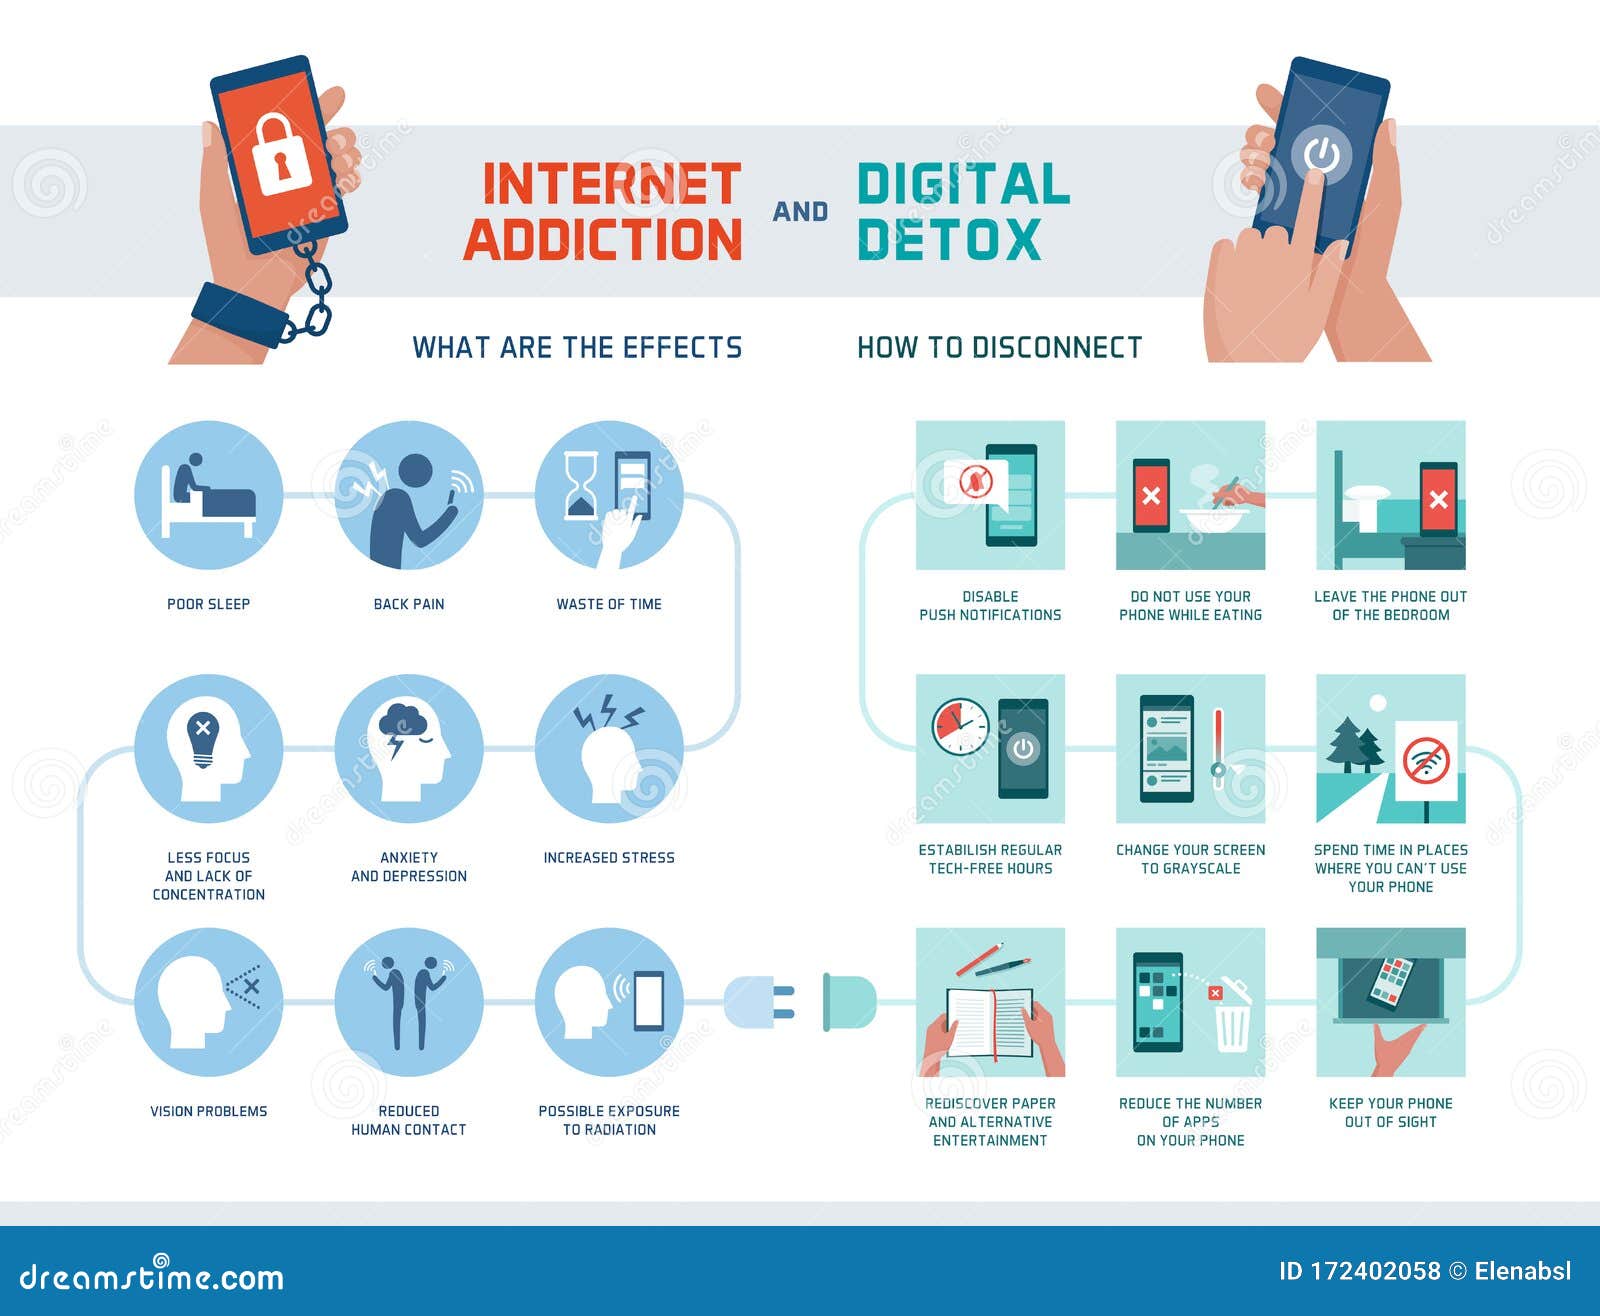 internet addiction solutions